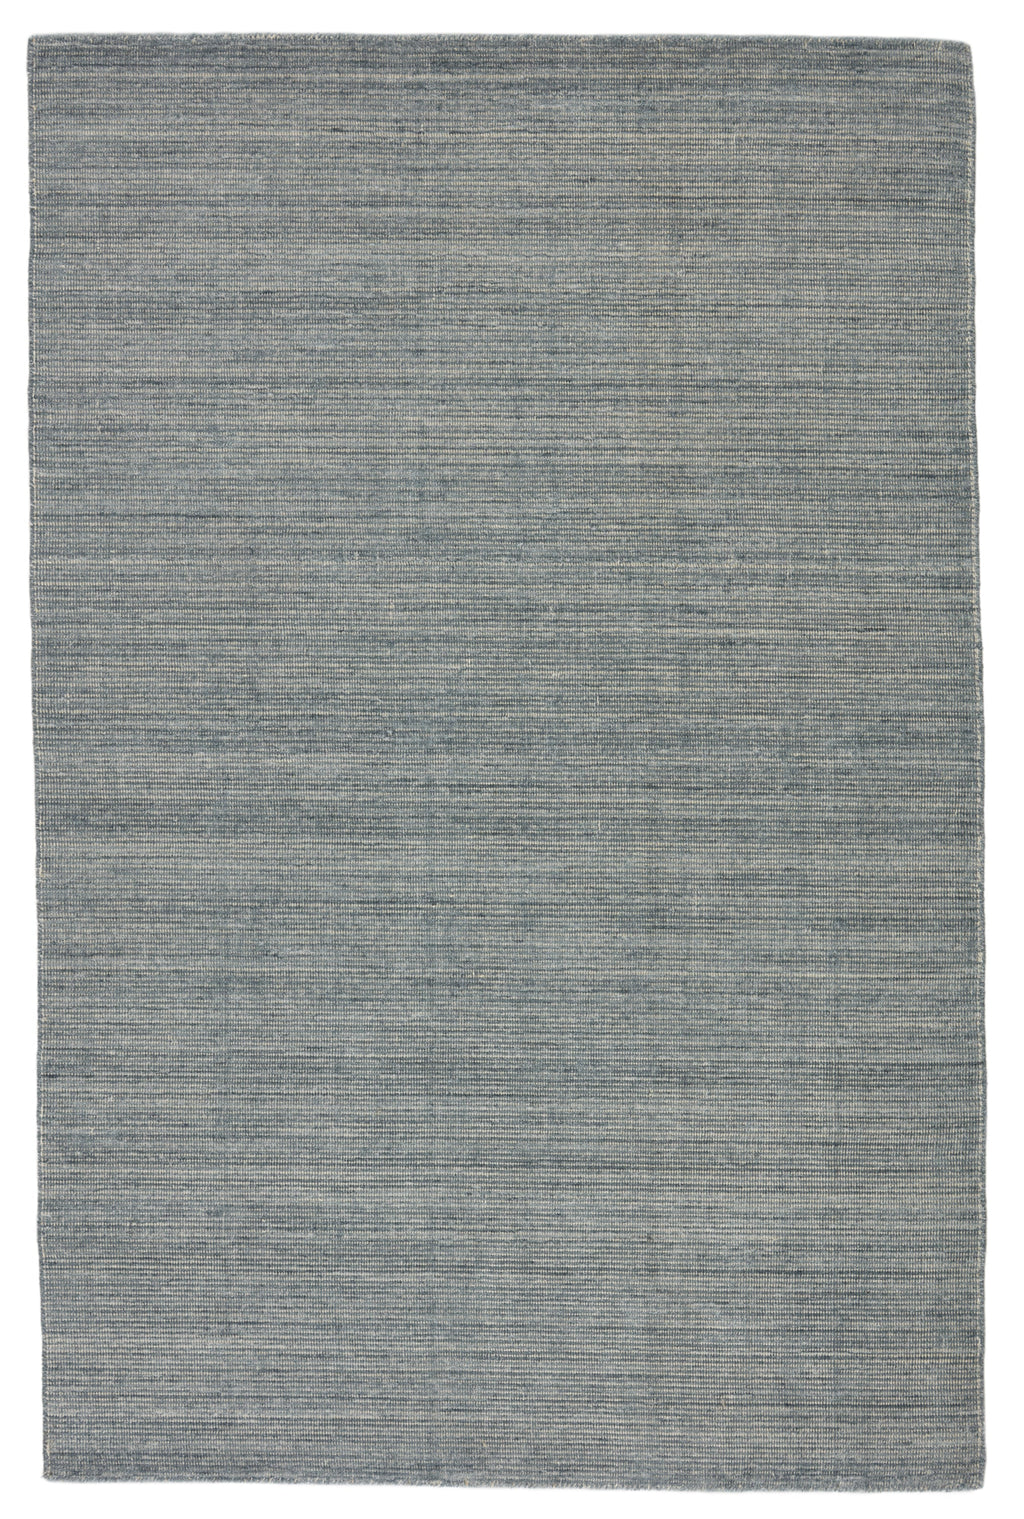 danan handmade solid blue gray rug by jaipur living 1